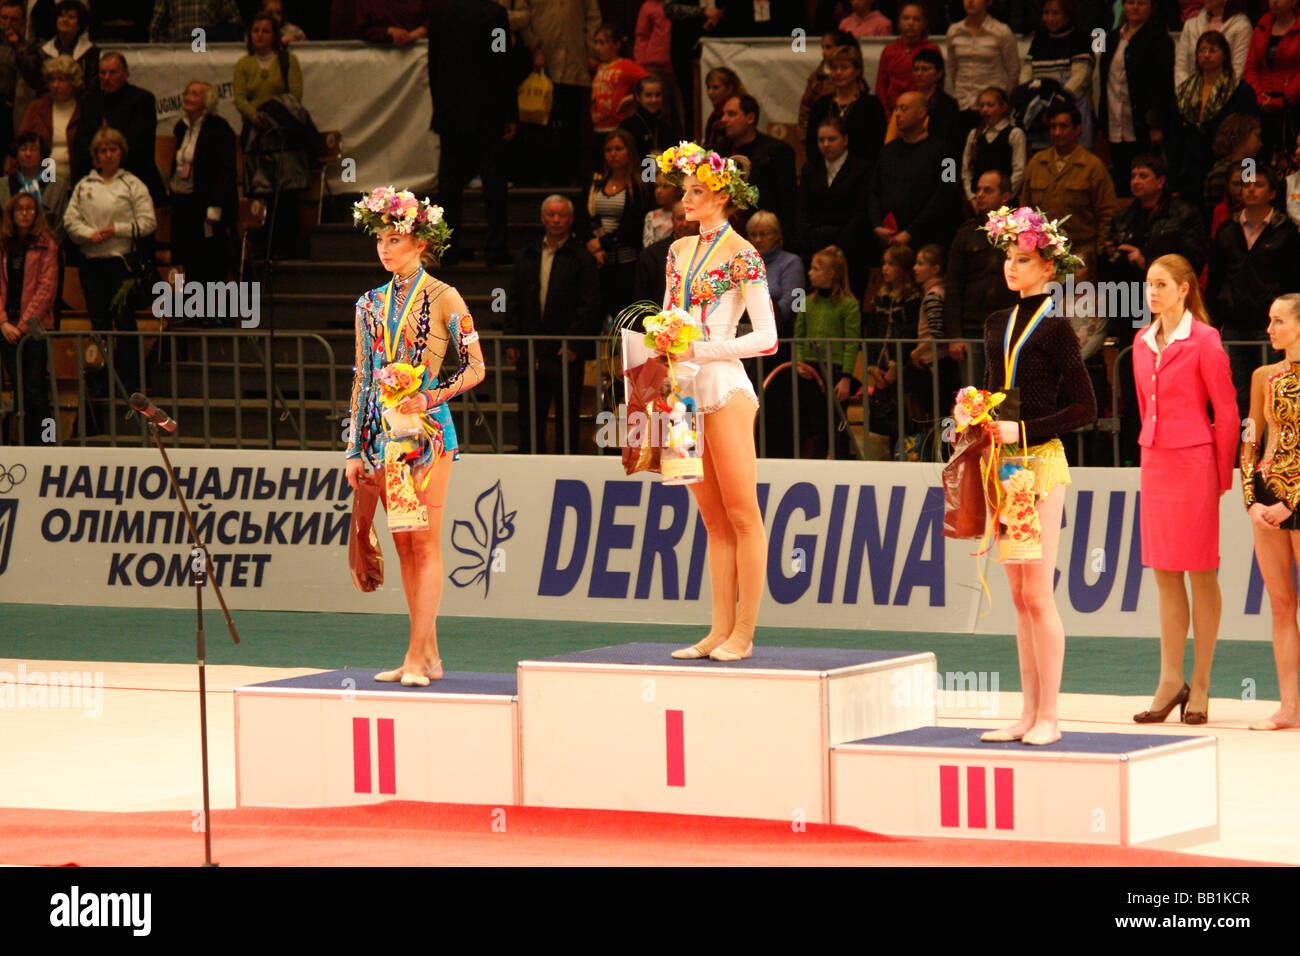 Ukraine's rythmic gymnastic star Anna Bessonova enjoys award ceremony on podium at Deriuguina Cup in Kyiv, Ukraine Stock Photo